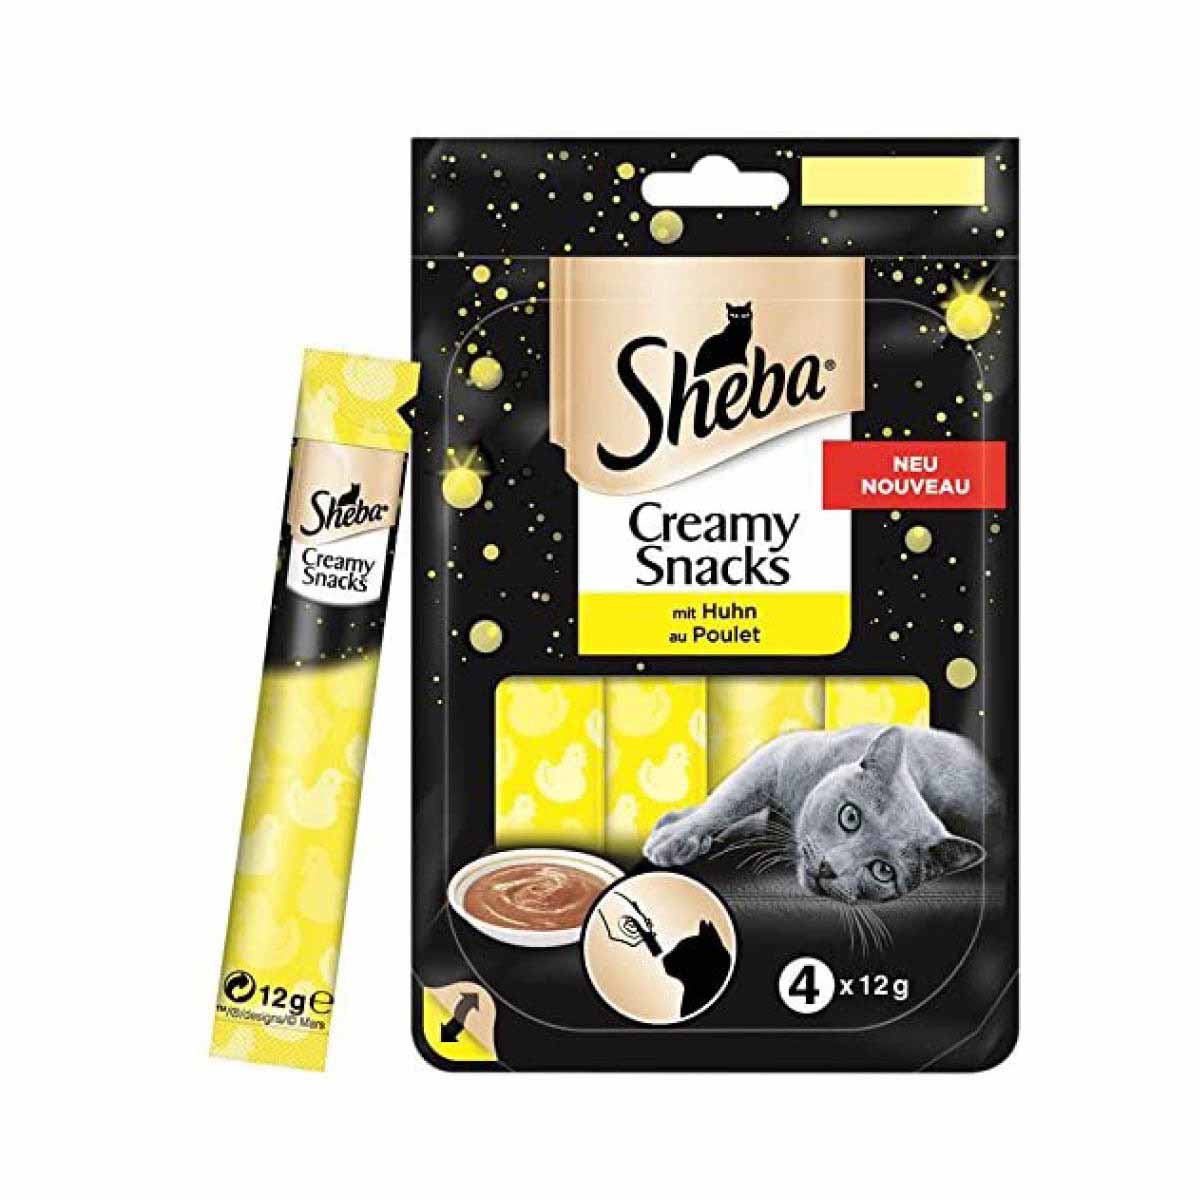 Sheba Creamy Snacks Multipack